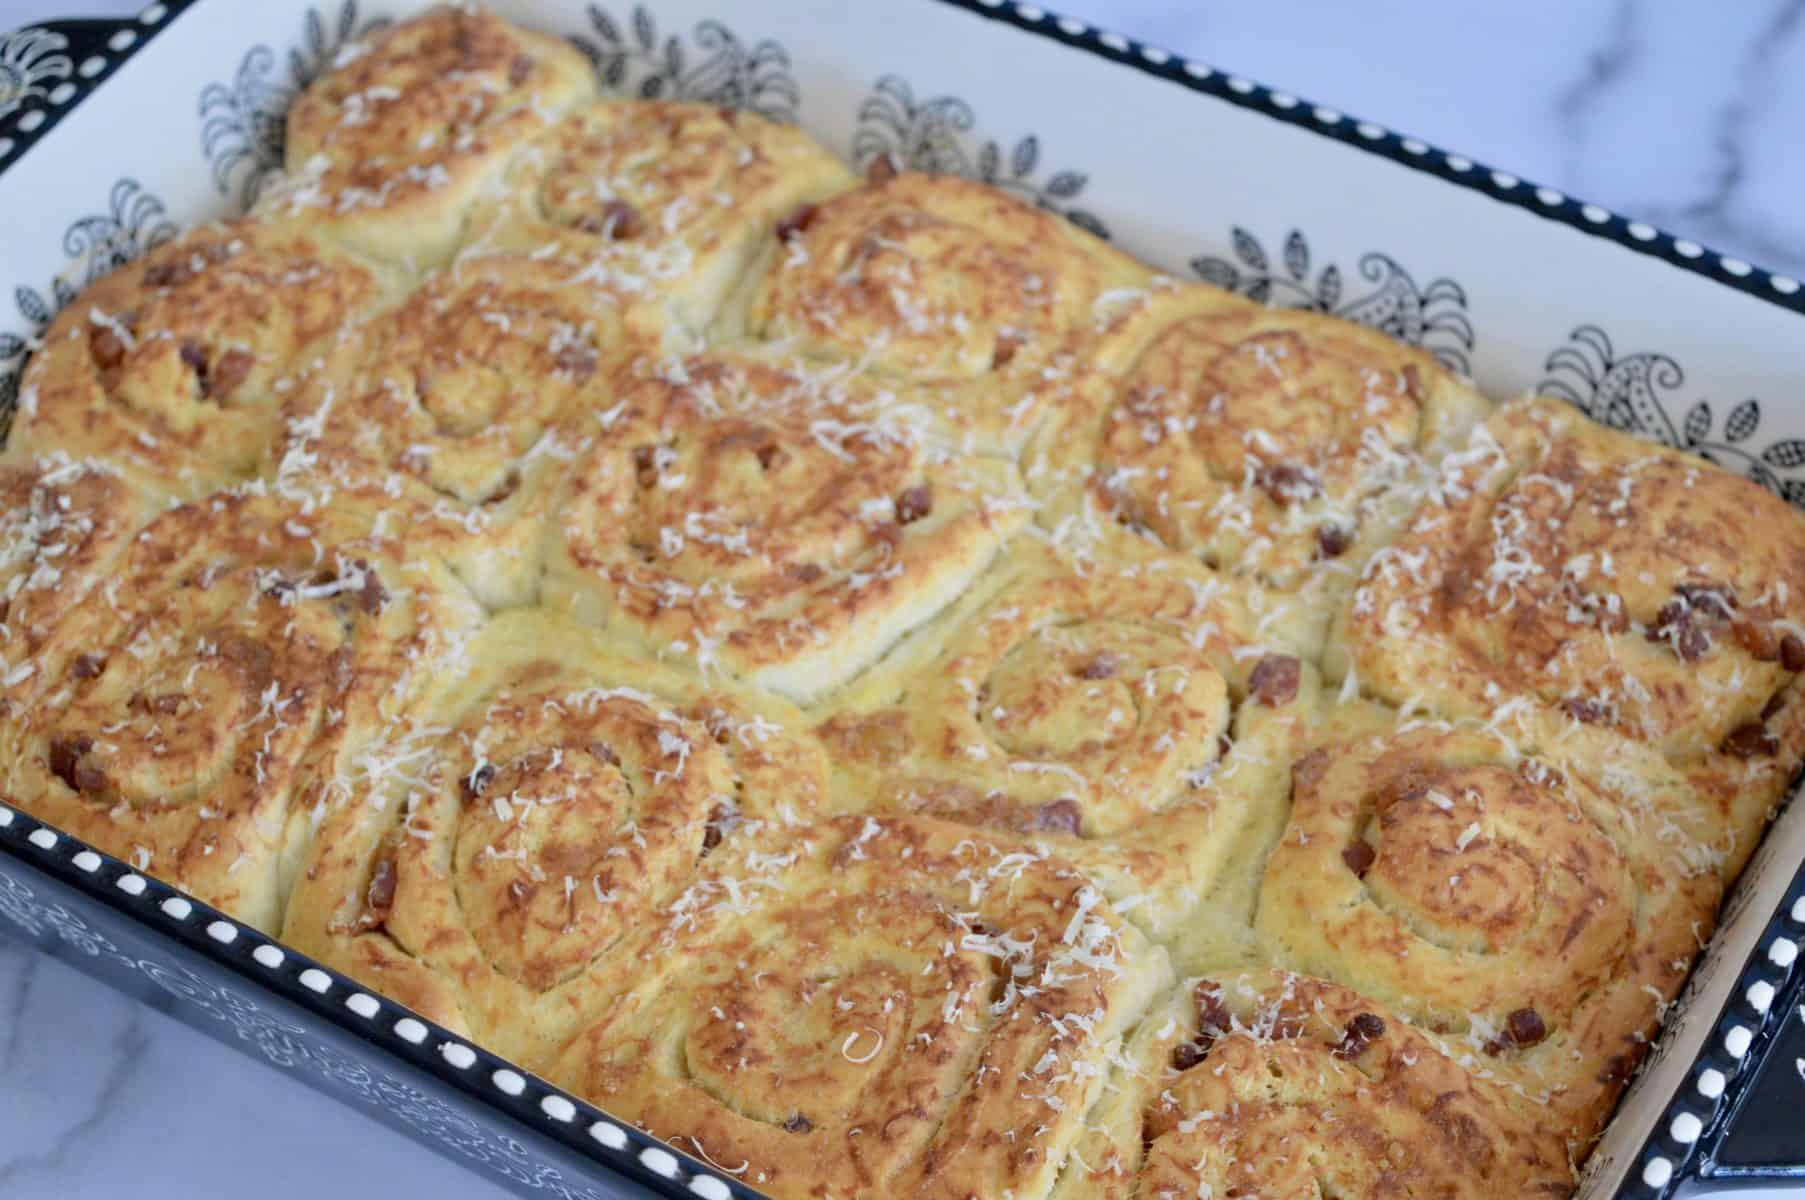 pinwheel bread rolls in a baking dish. 